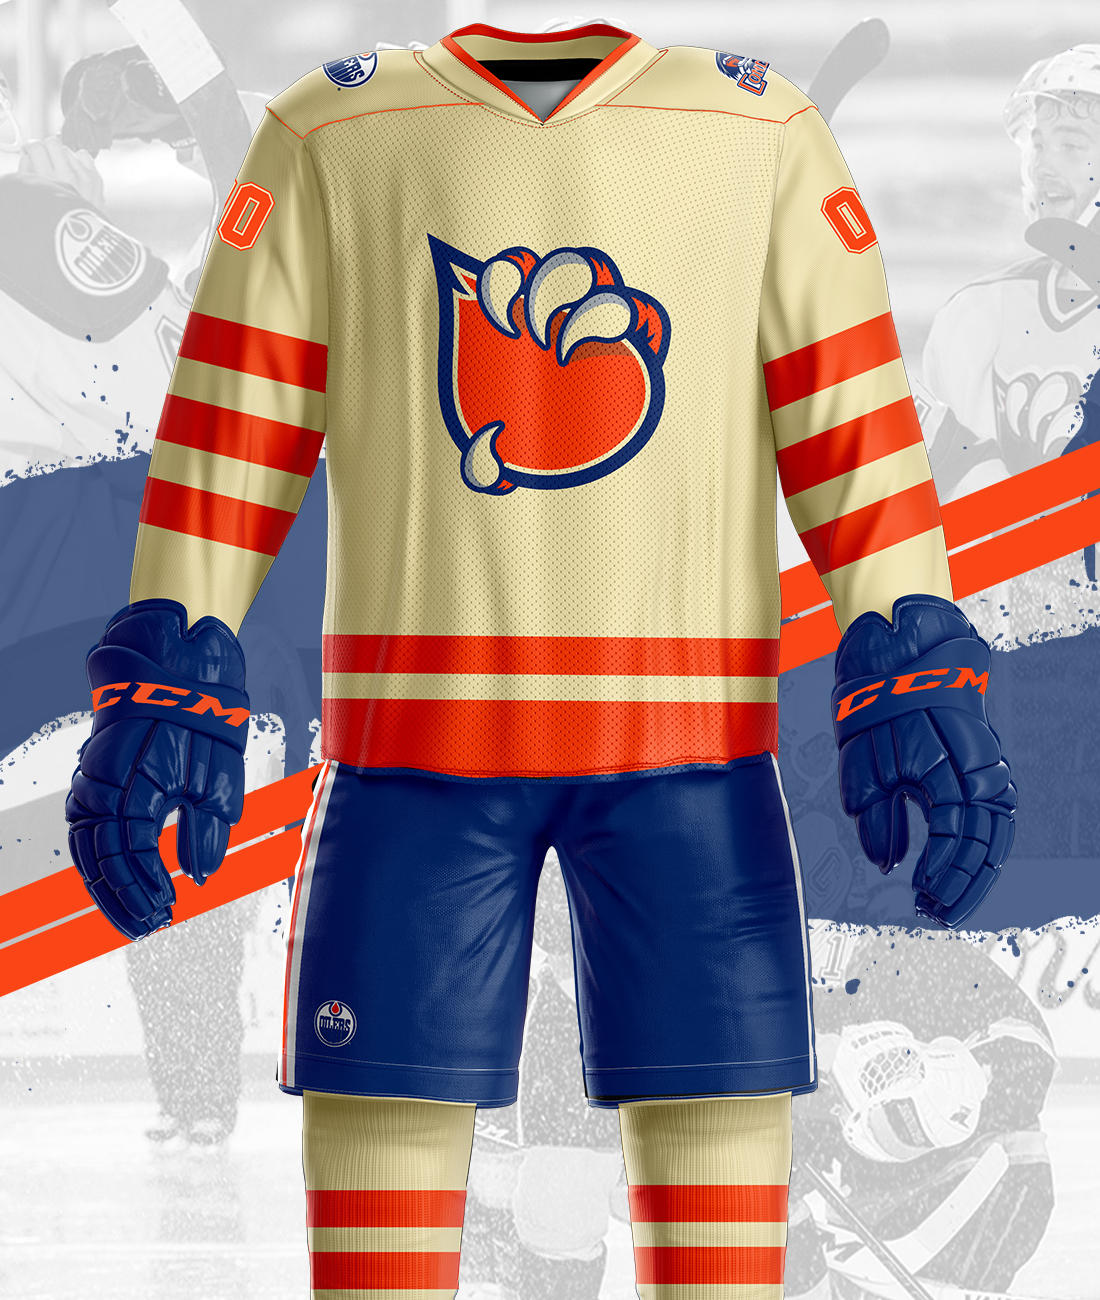 Condors reveal new AHL jersey designs —